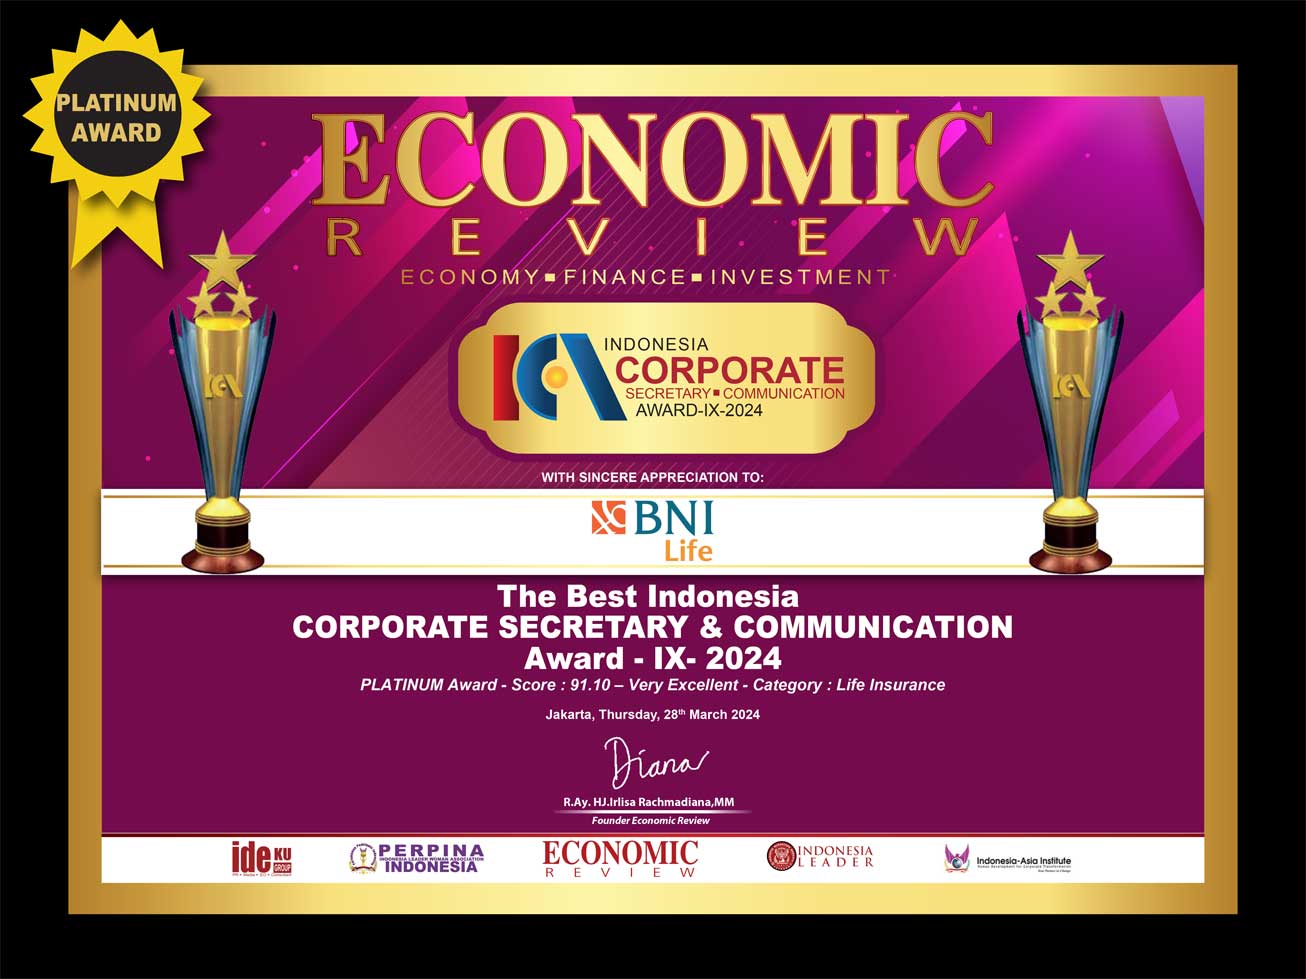 Indonesia Corporate Secretary & Communication Award - IX - 2024